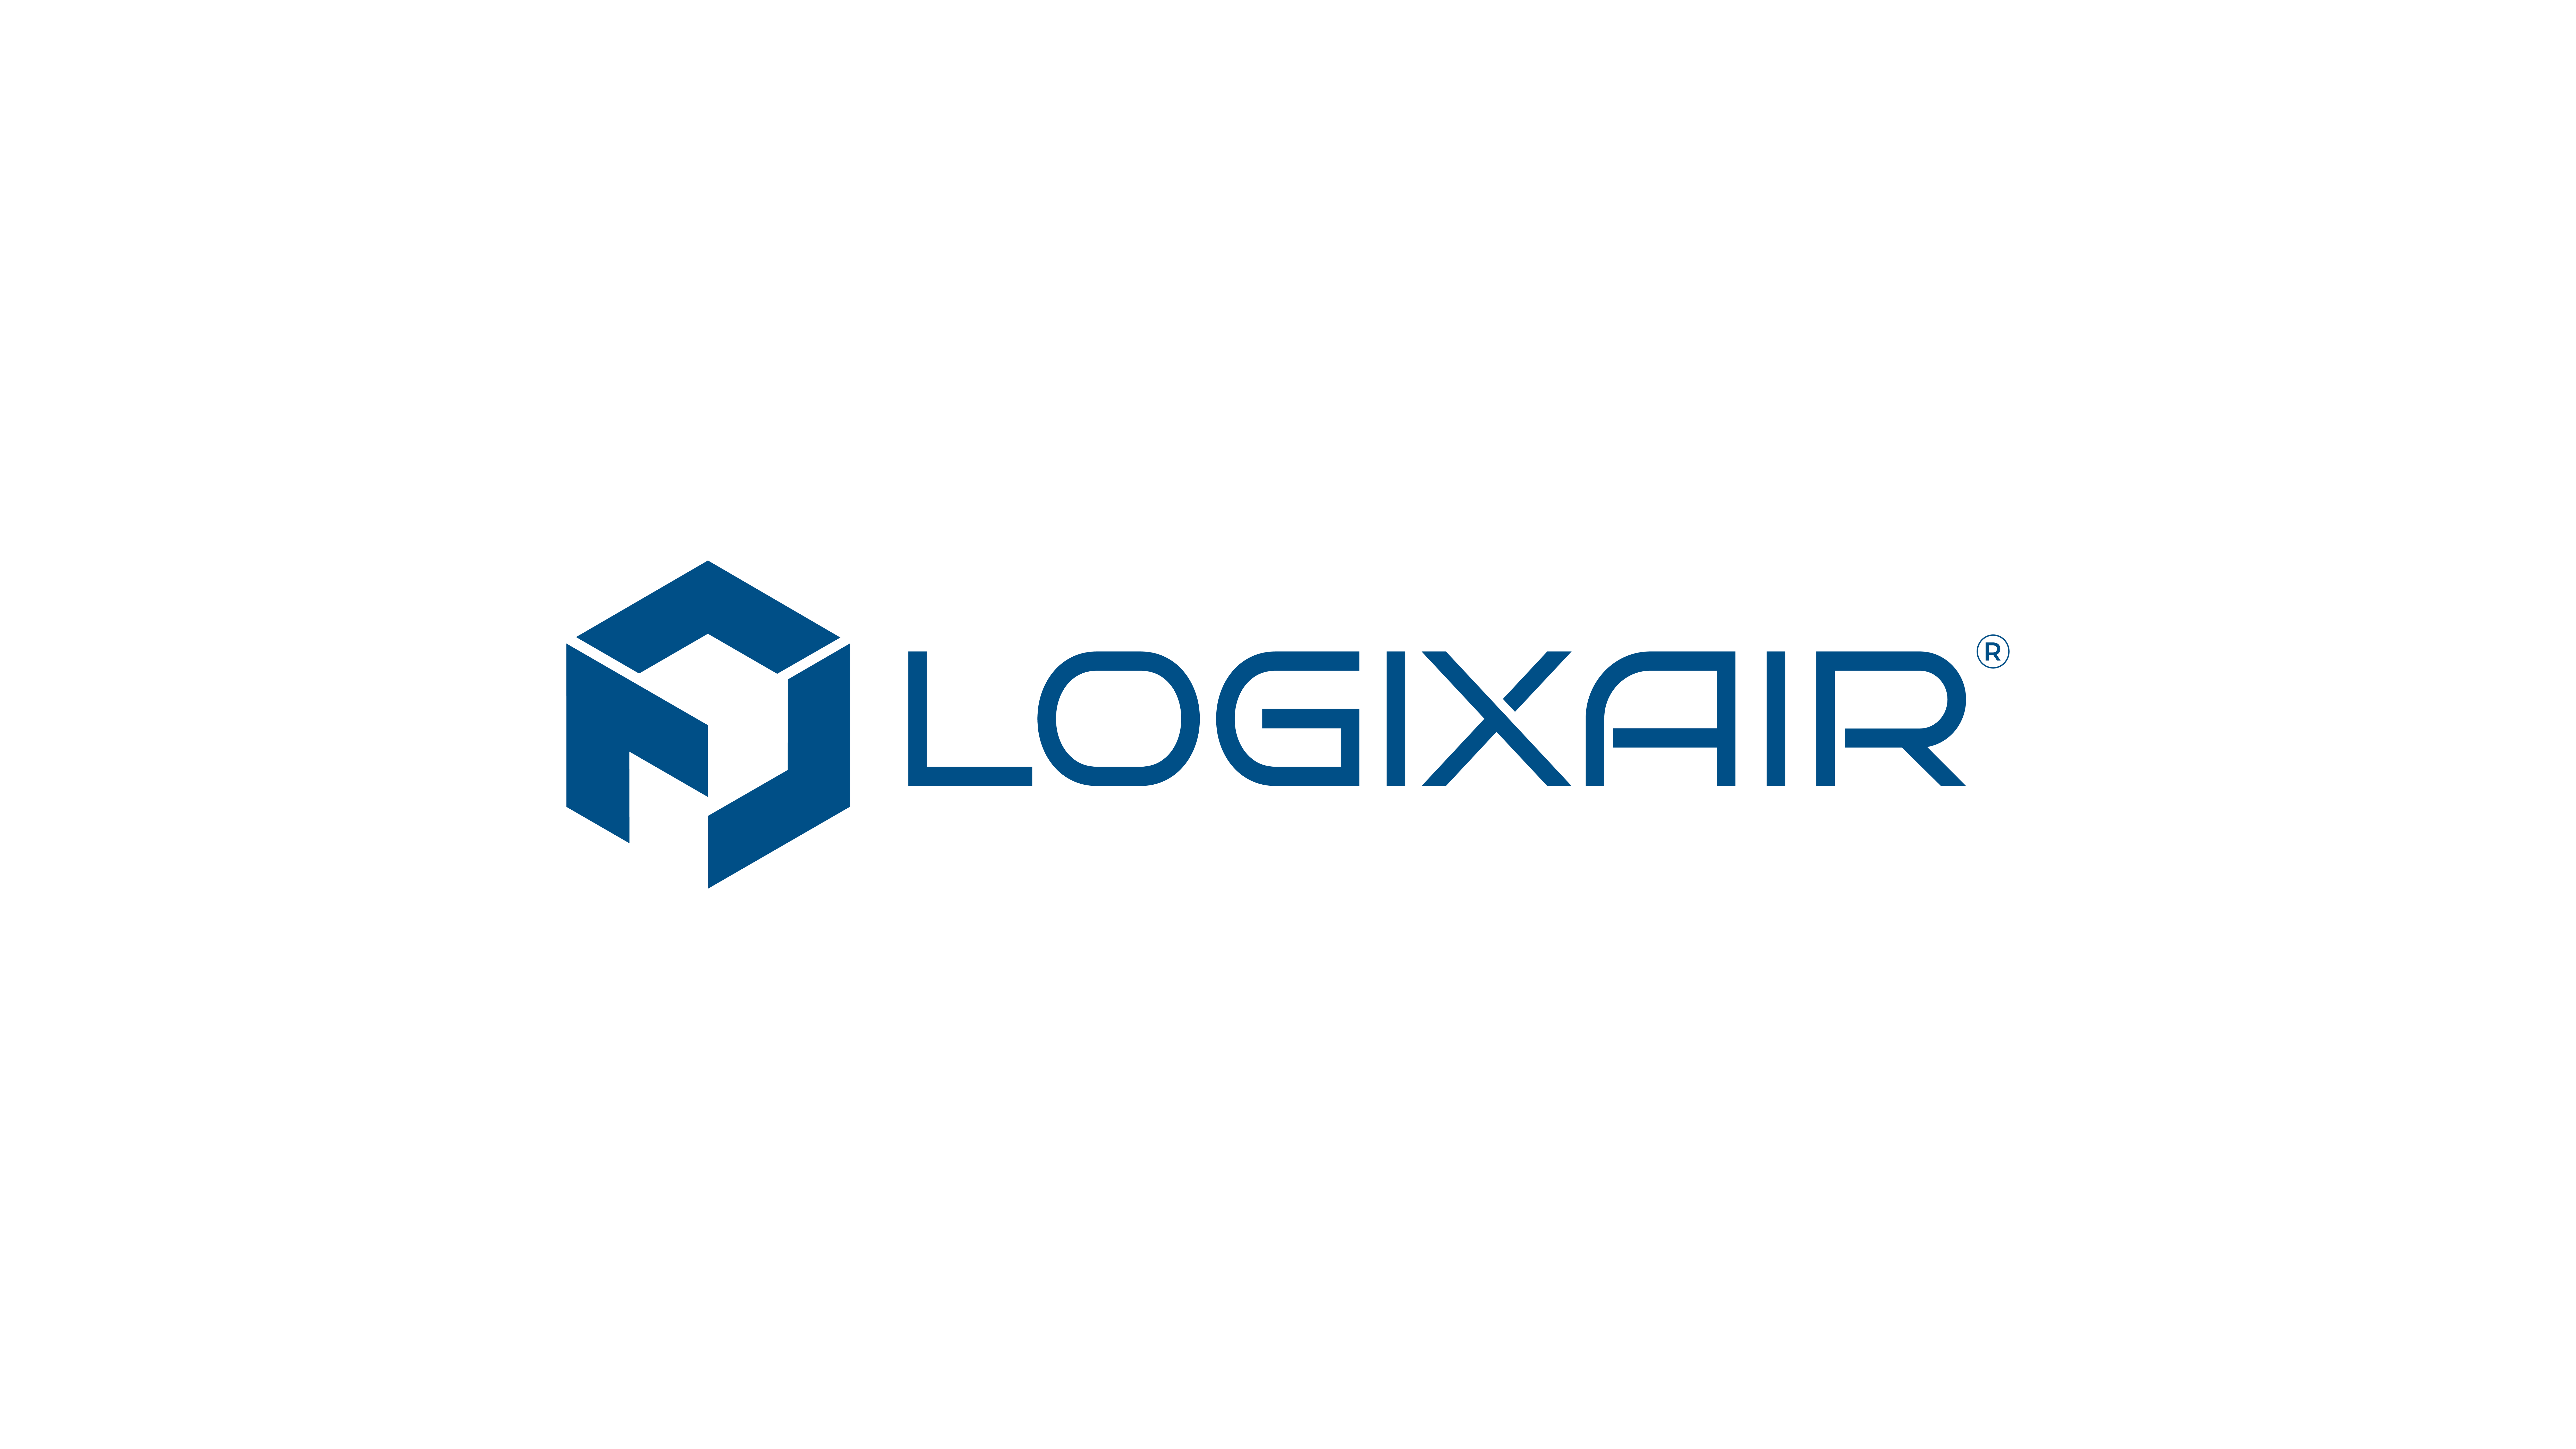 Brand Identity Design for Cargo Drone Startup - Image de marque & branding